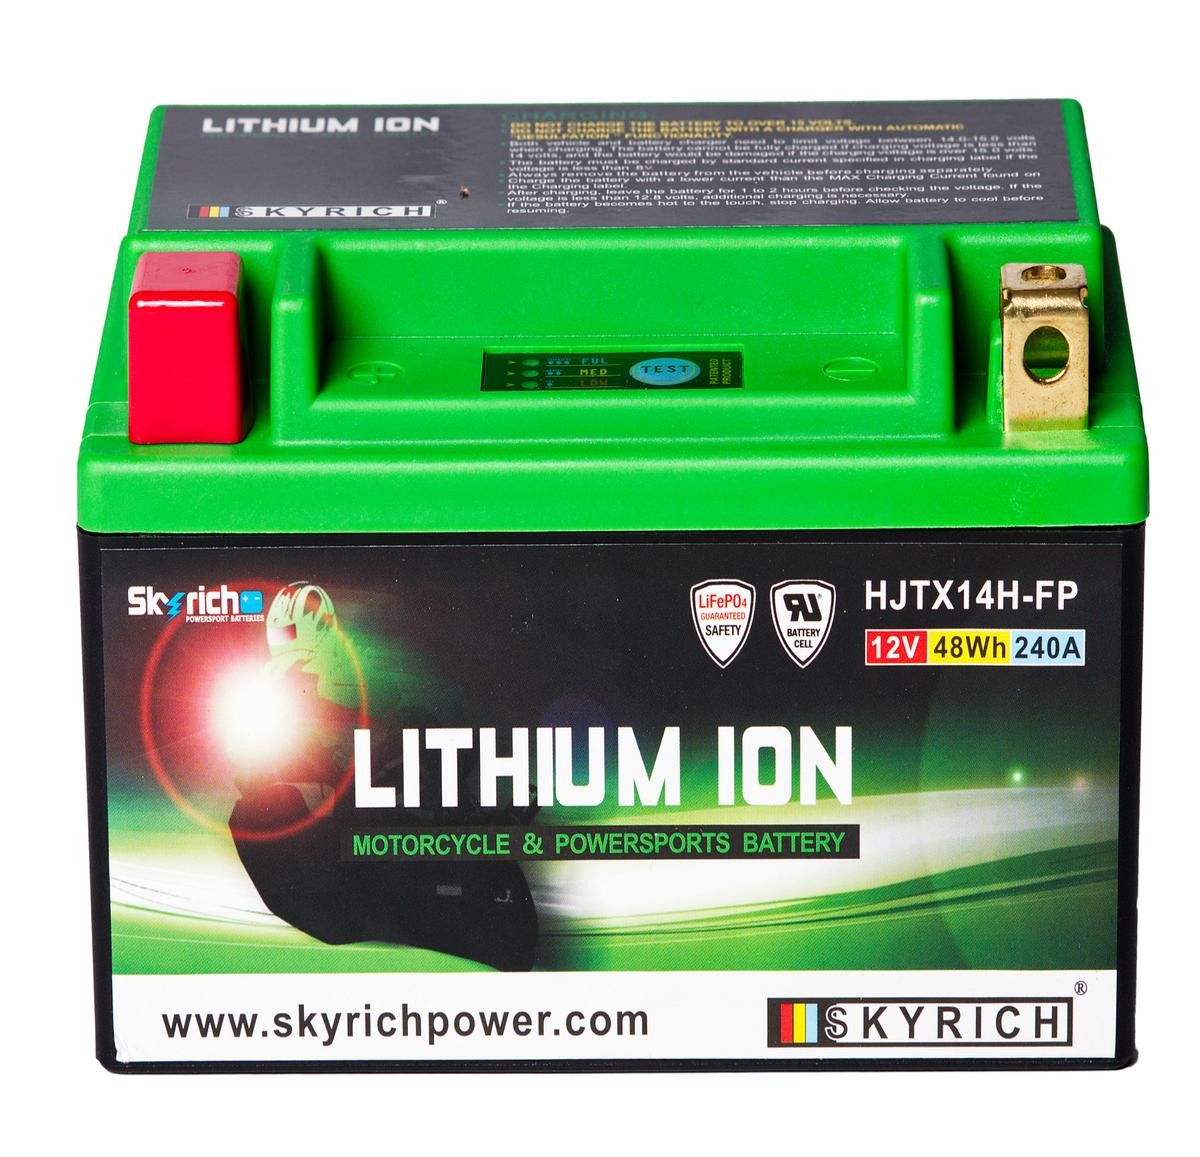 SKYRICH LITHIUM ION HJTX14H-FP CAGIVA Batterie Motorrad zum günstigen Preis